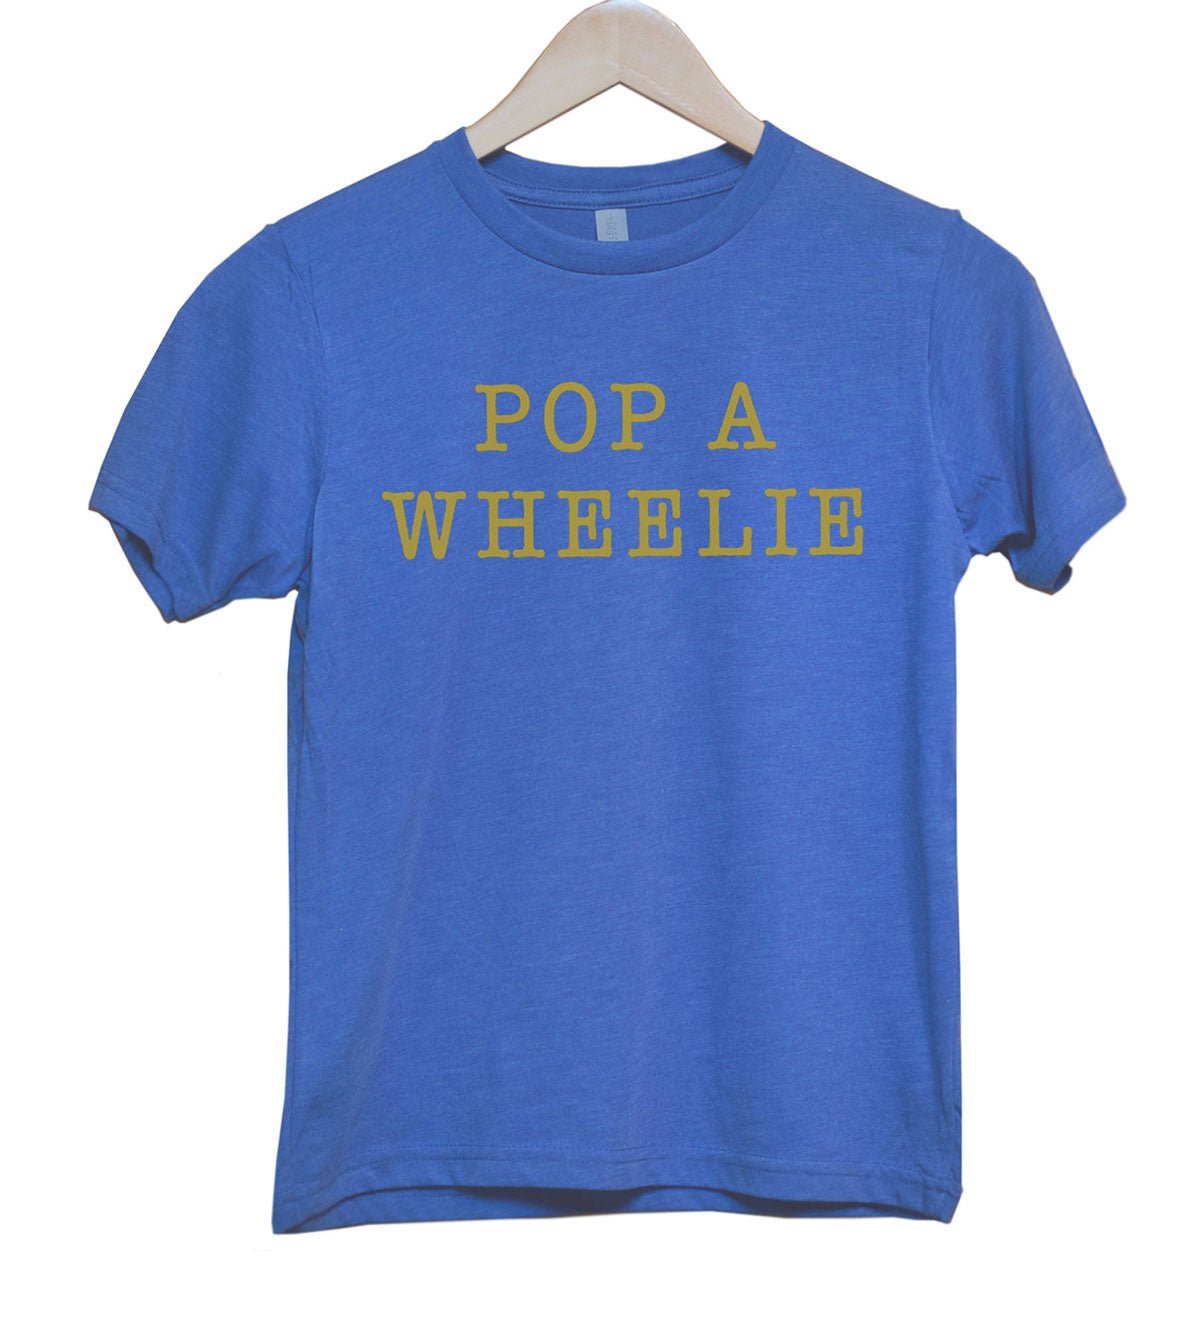 Pop A Wheelie!